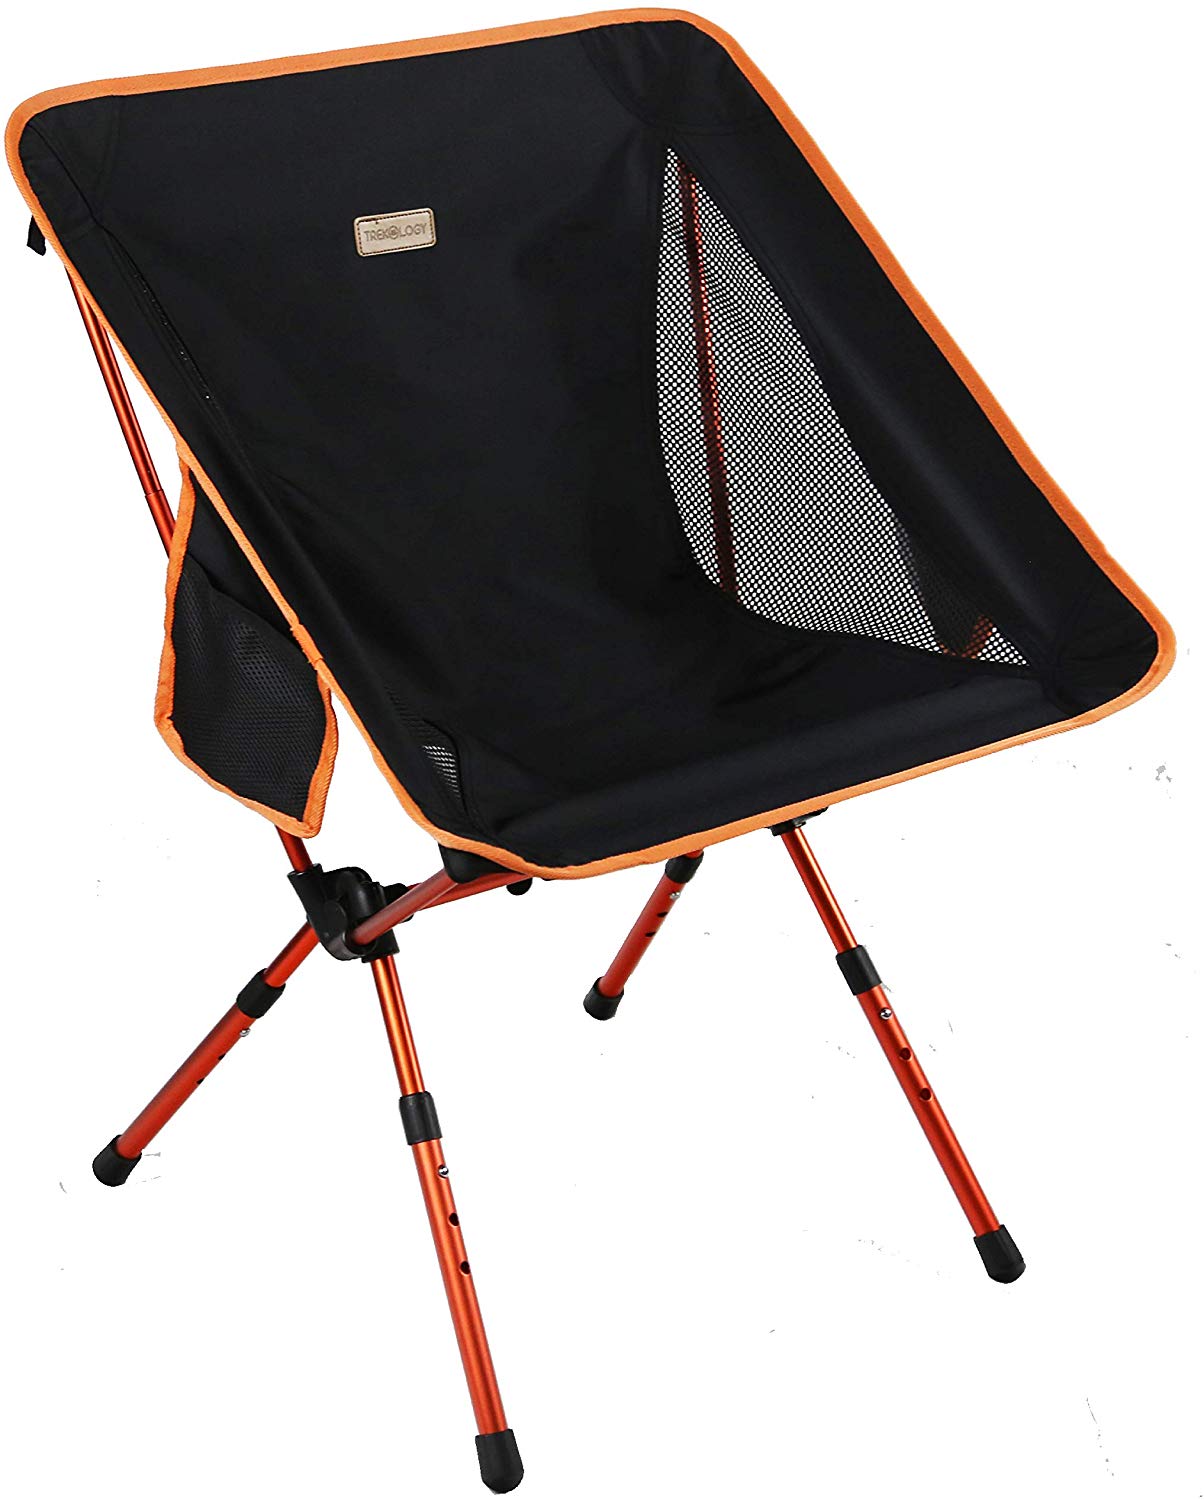 Trekology YIZI Portable Camping Chair